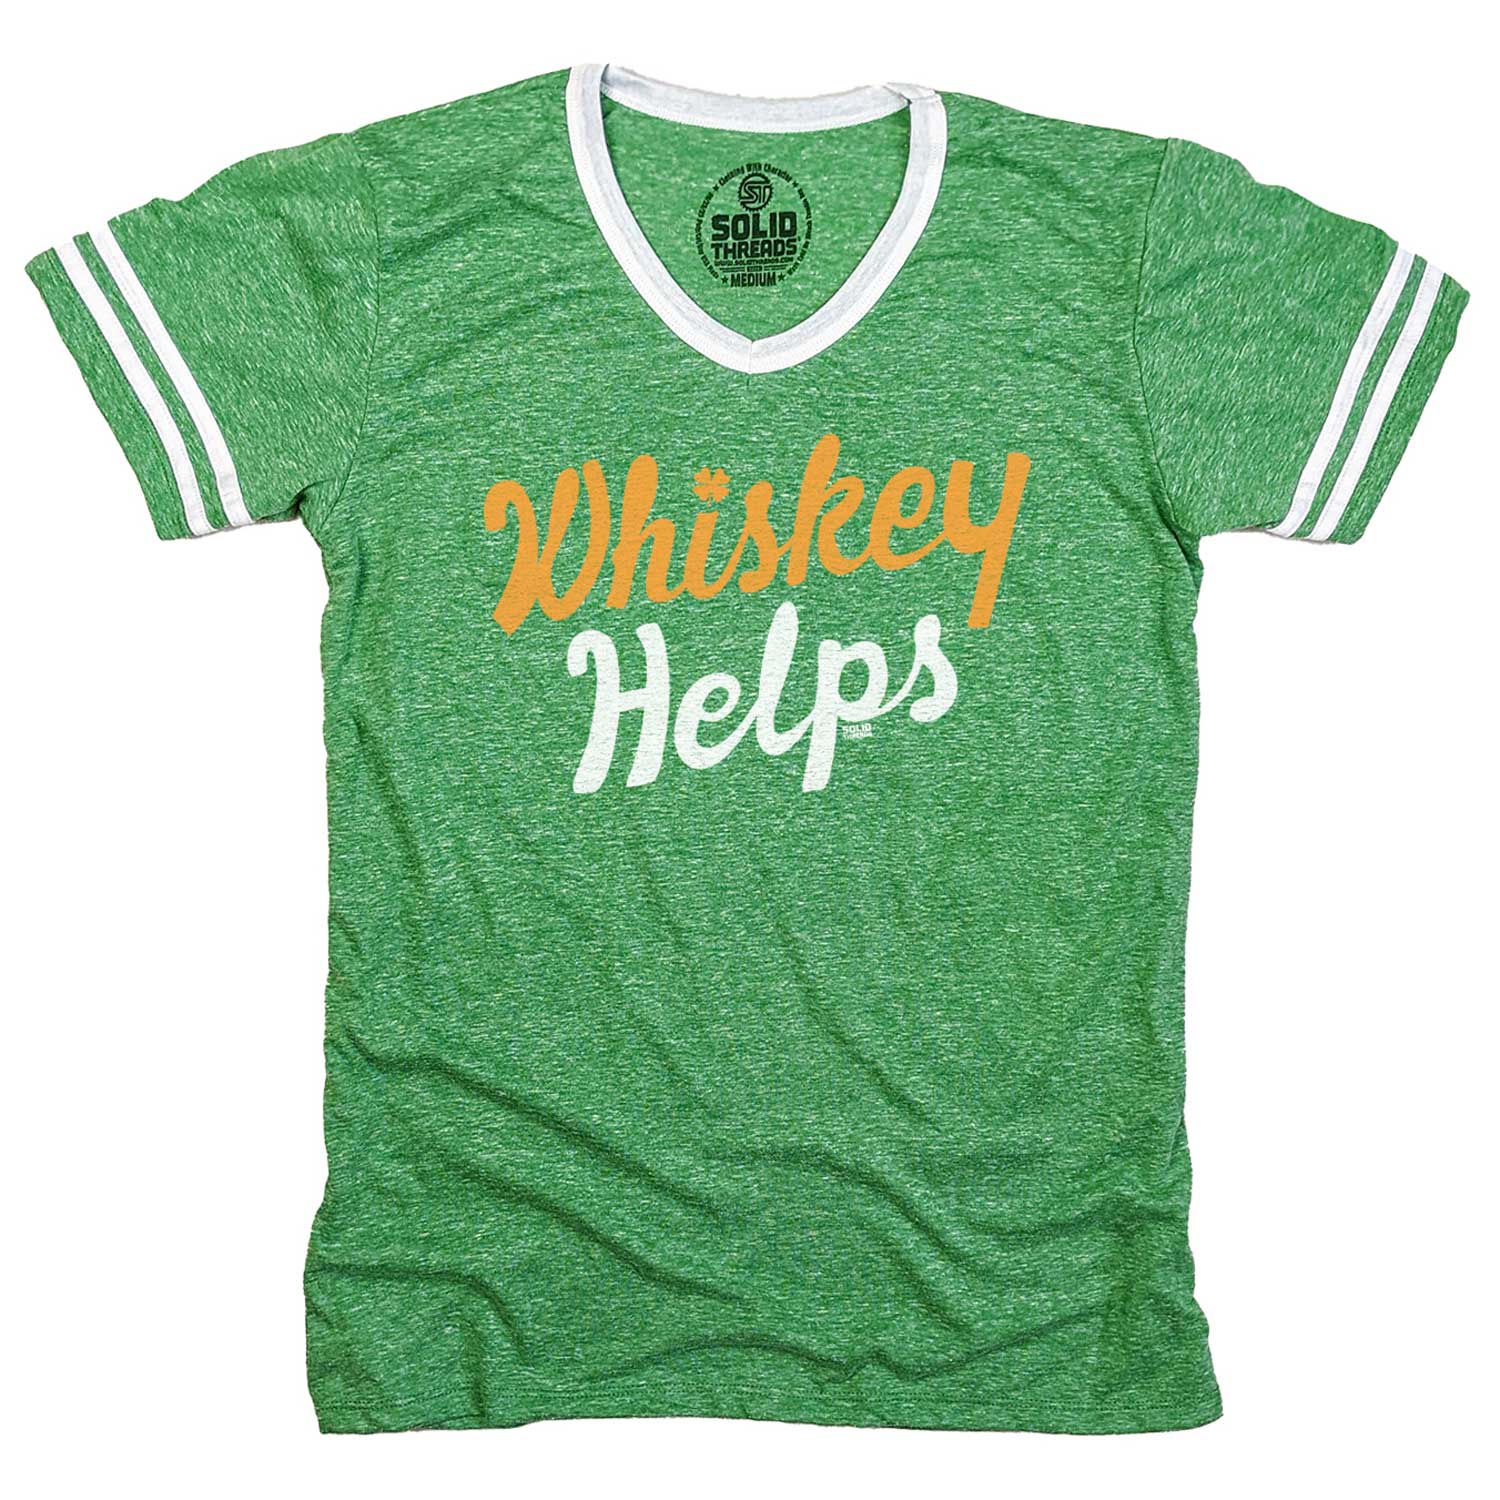 Men's Irish Whiskey Helps Vintage Graphic V-Neck Tee | Funny Irish T-shirt | Solid Threads